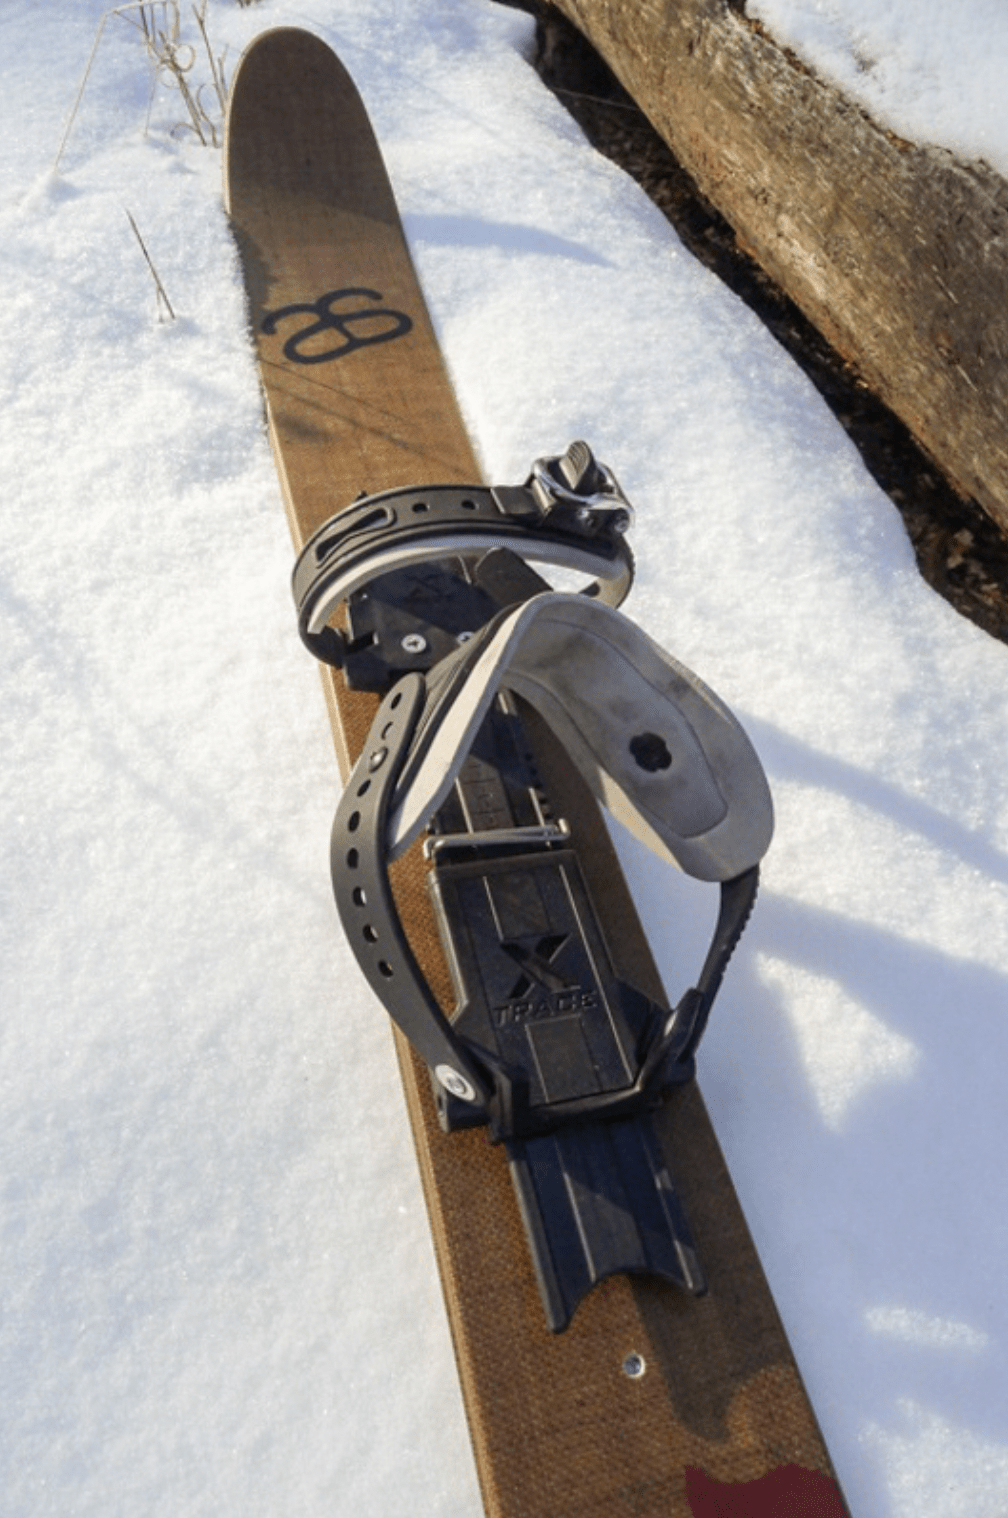 Hok Ski 145cm With Universal Pivot Binding – Fresh Tracks Outdoors